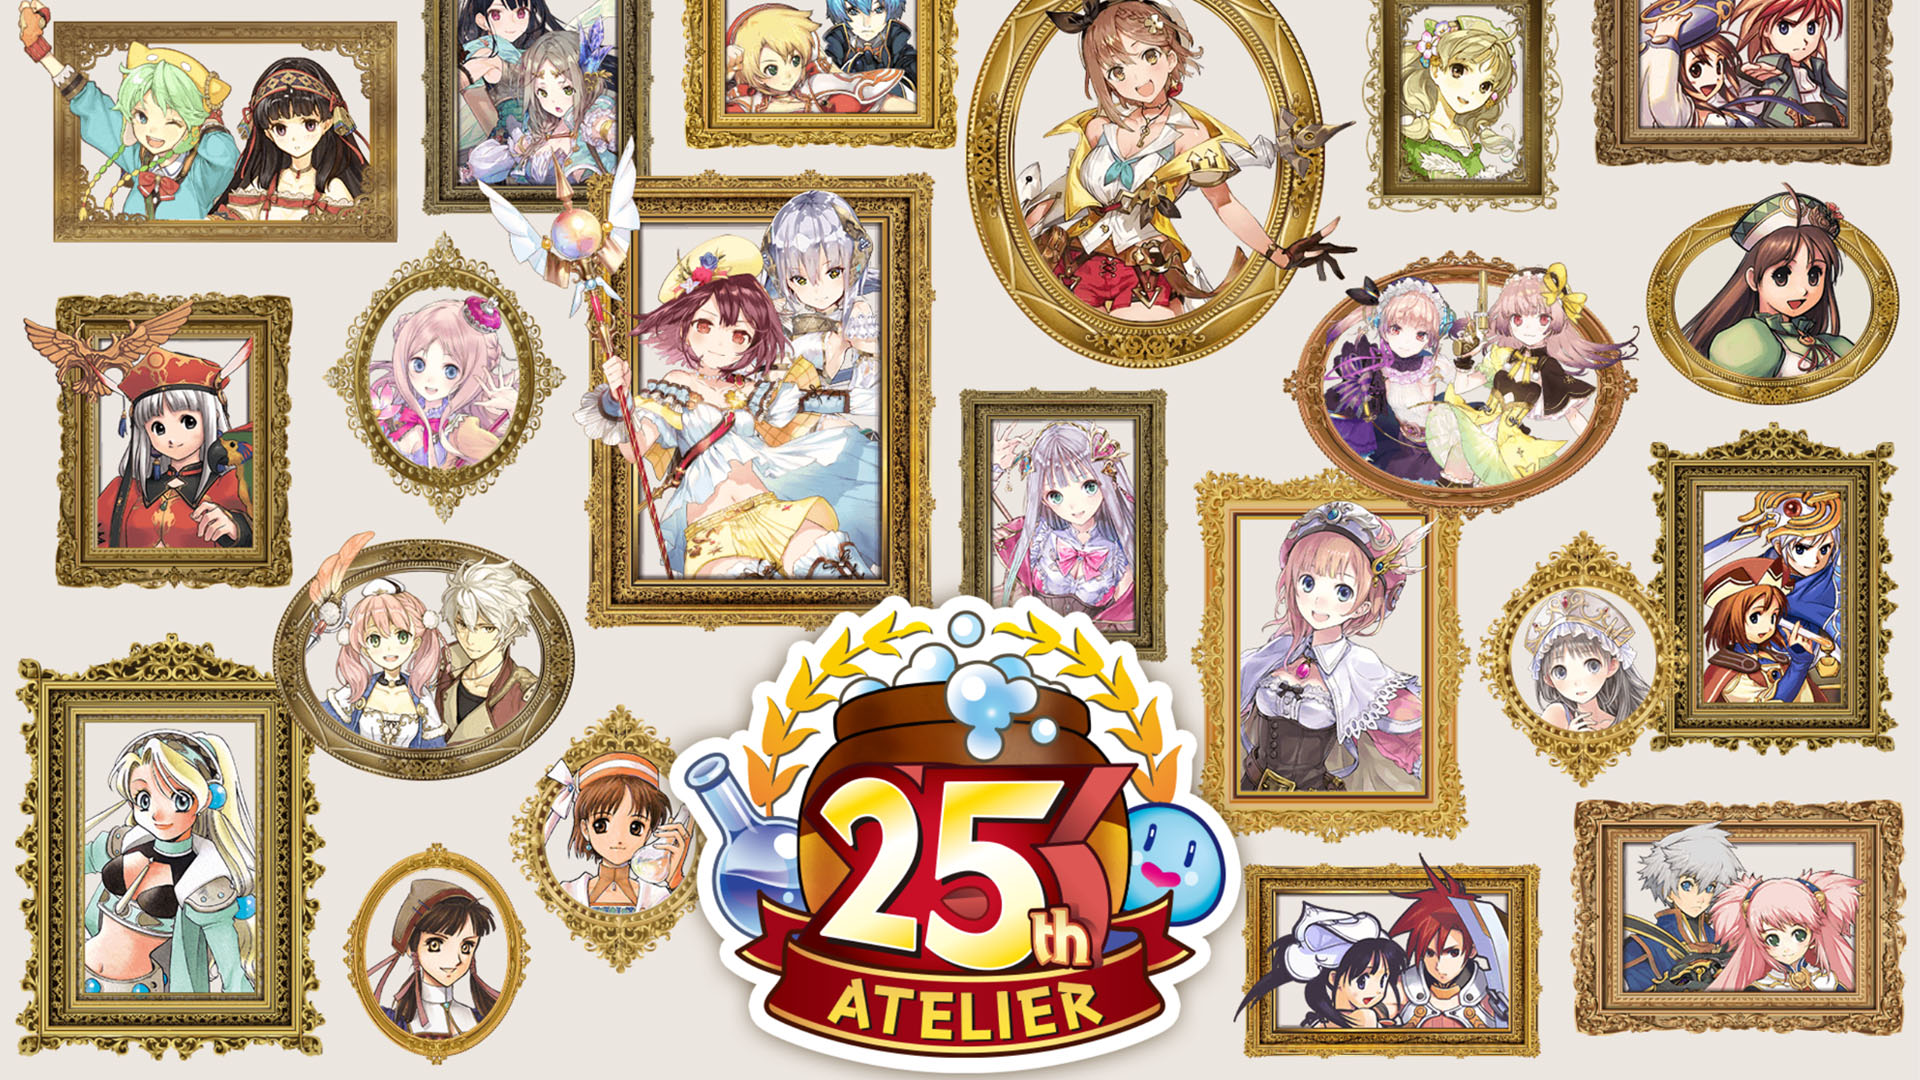 Atelier 25th Anniversary Site